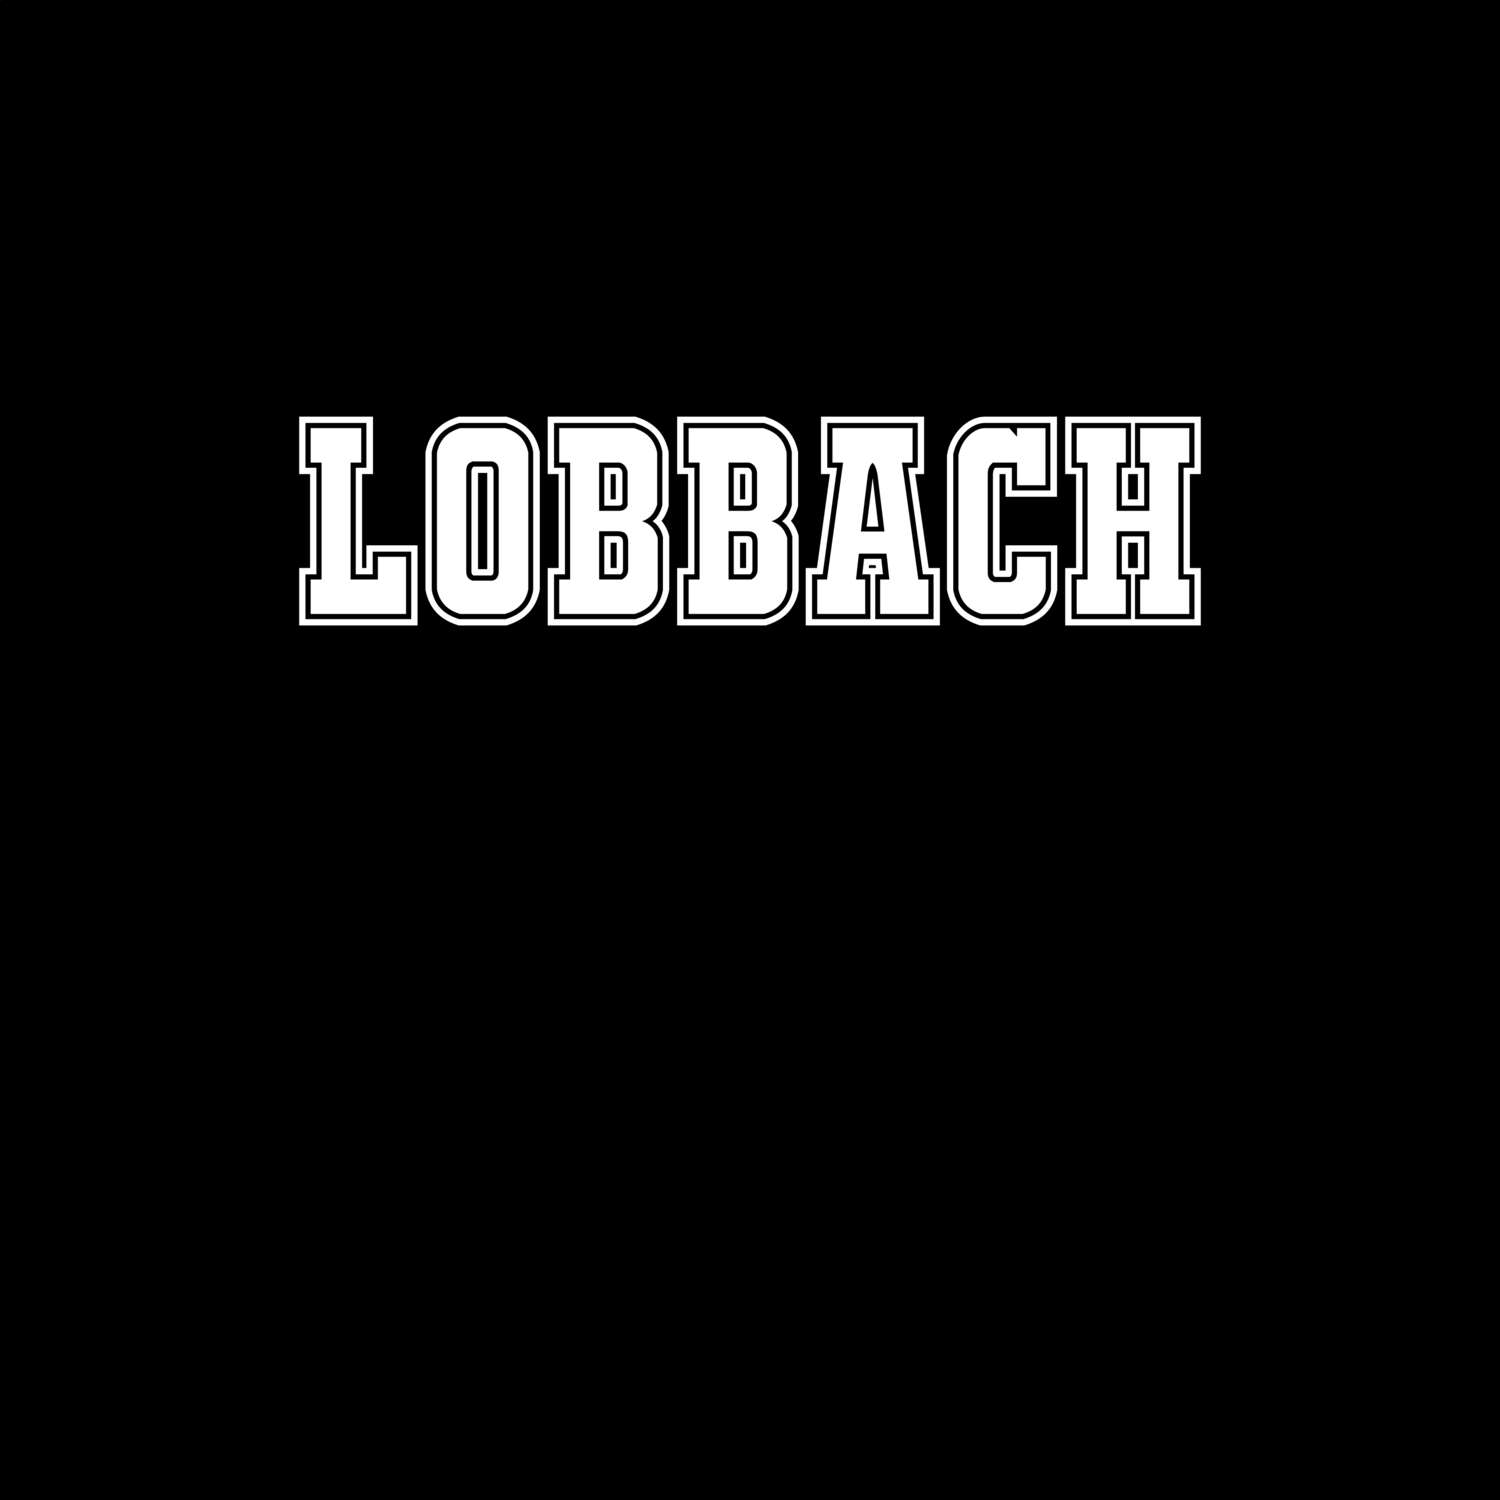 Lobbach T-Shirt »Classic«